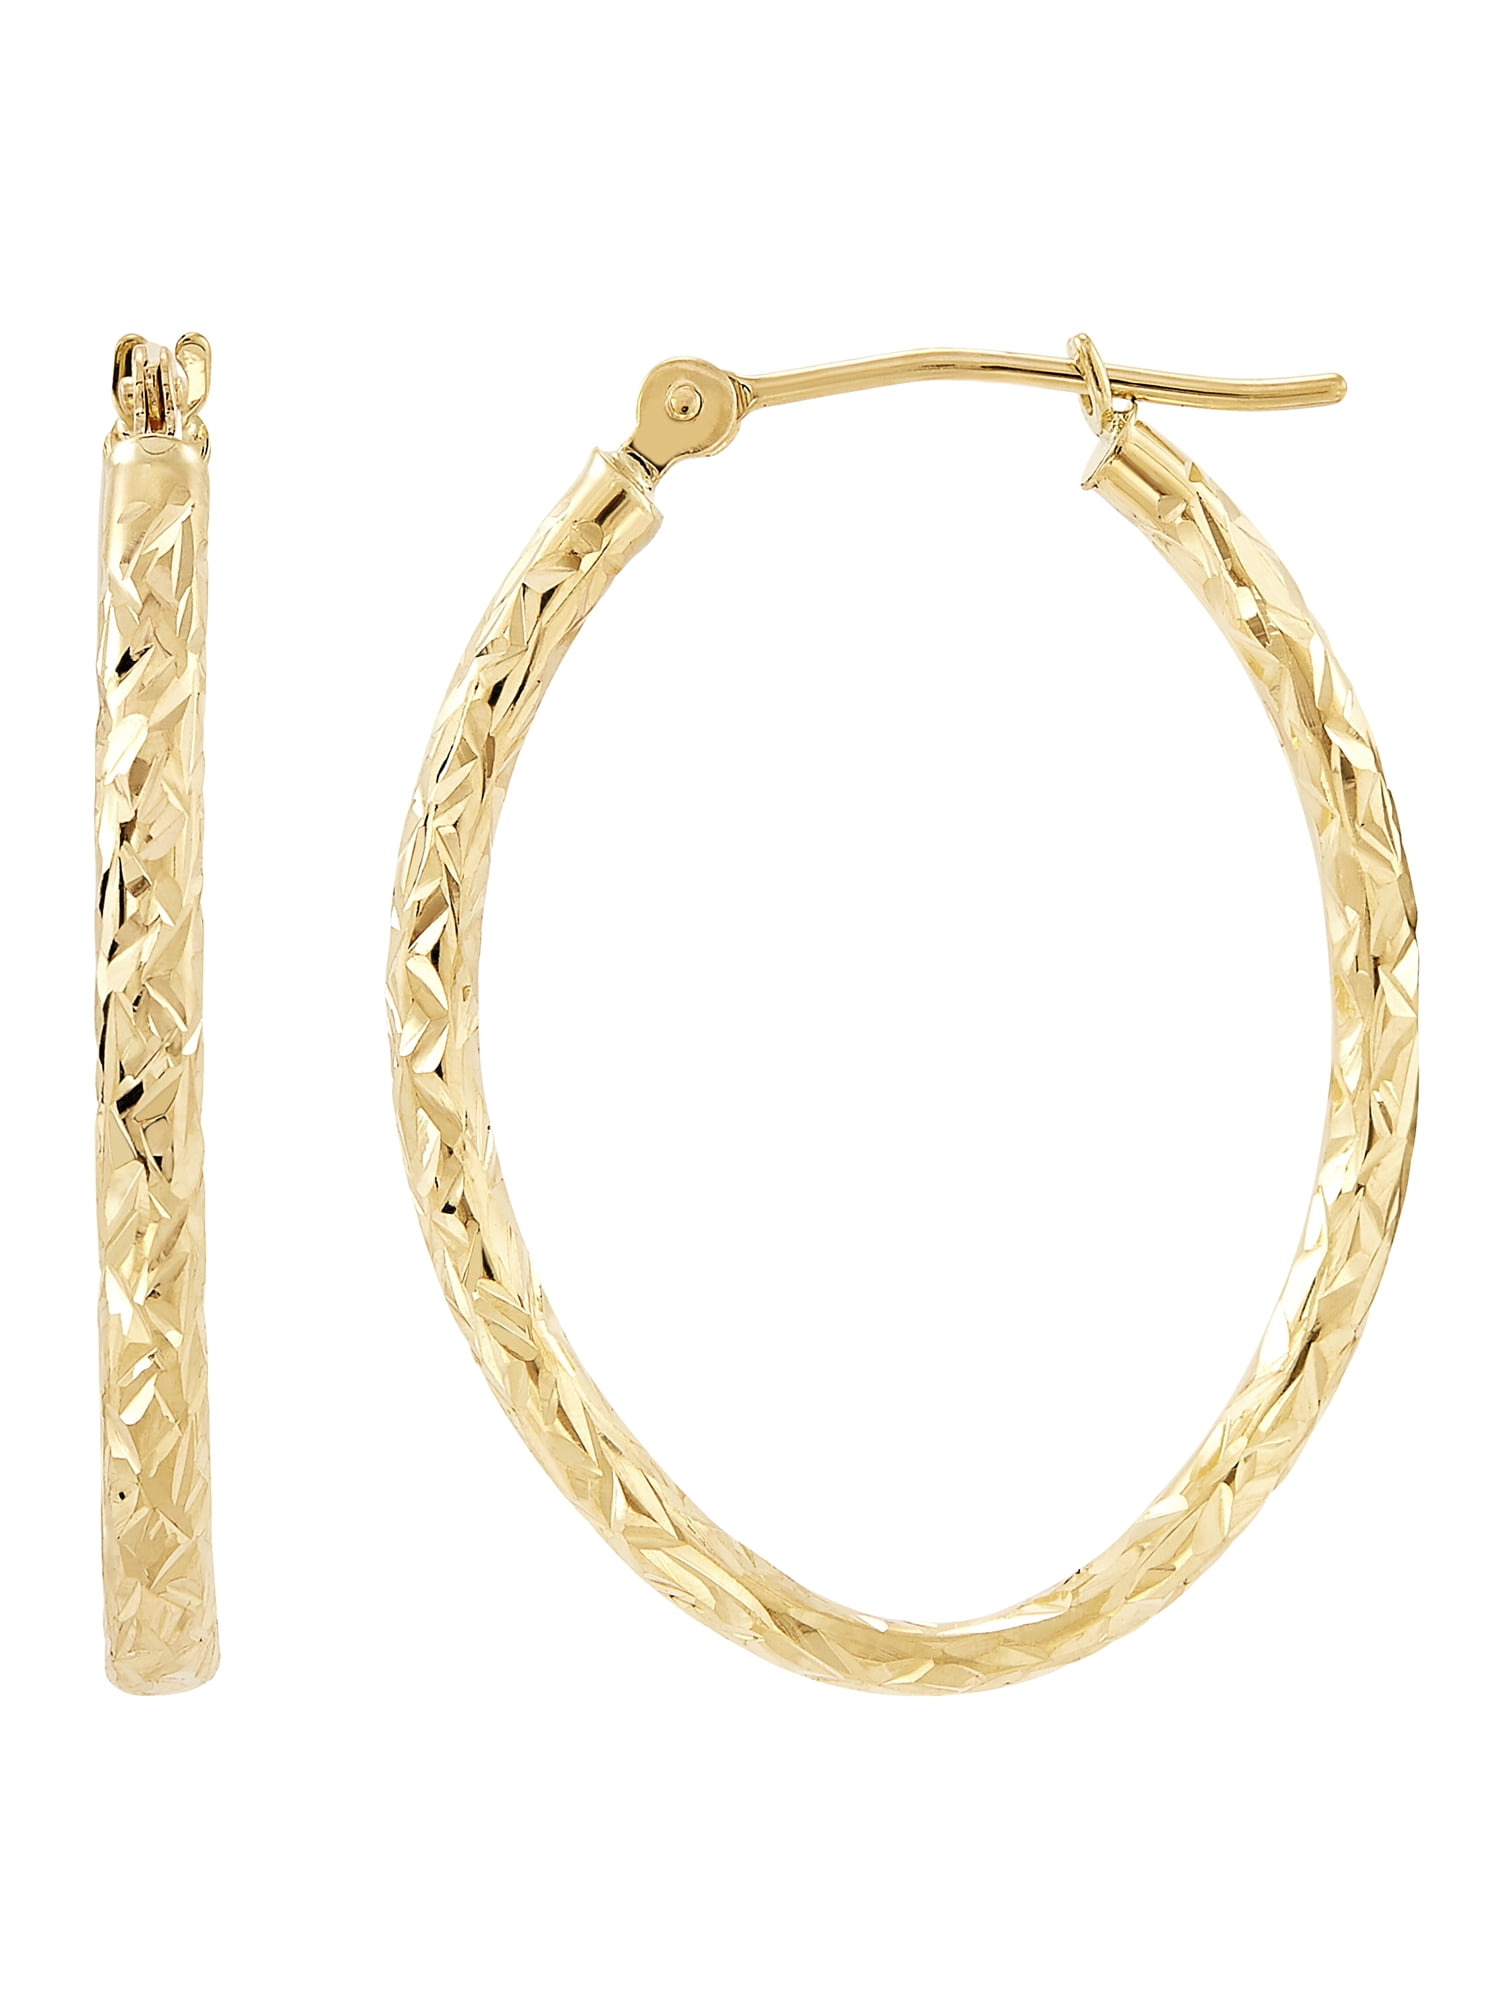 Mia Diamonds 10k Yellow Gold Polished and Textured Twist Hoop Earrings